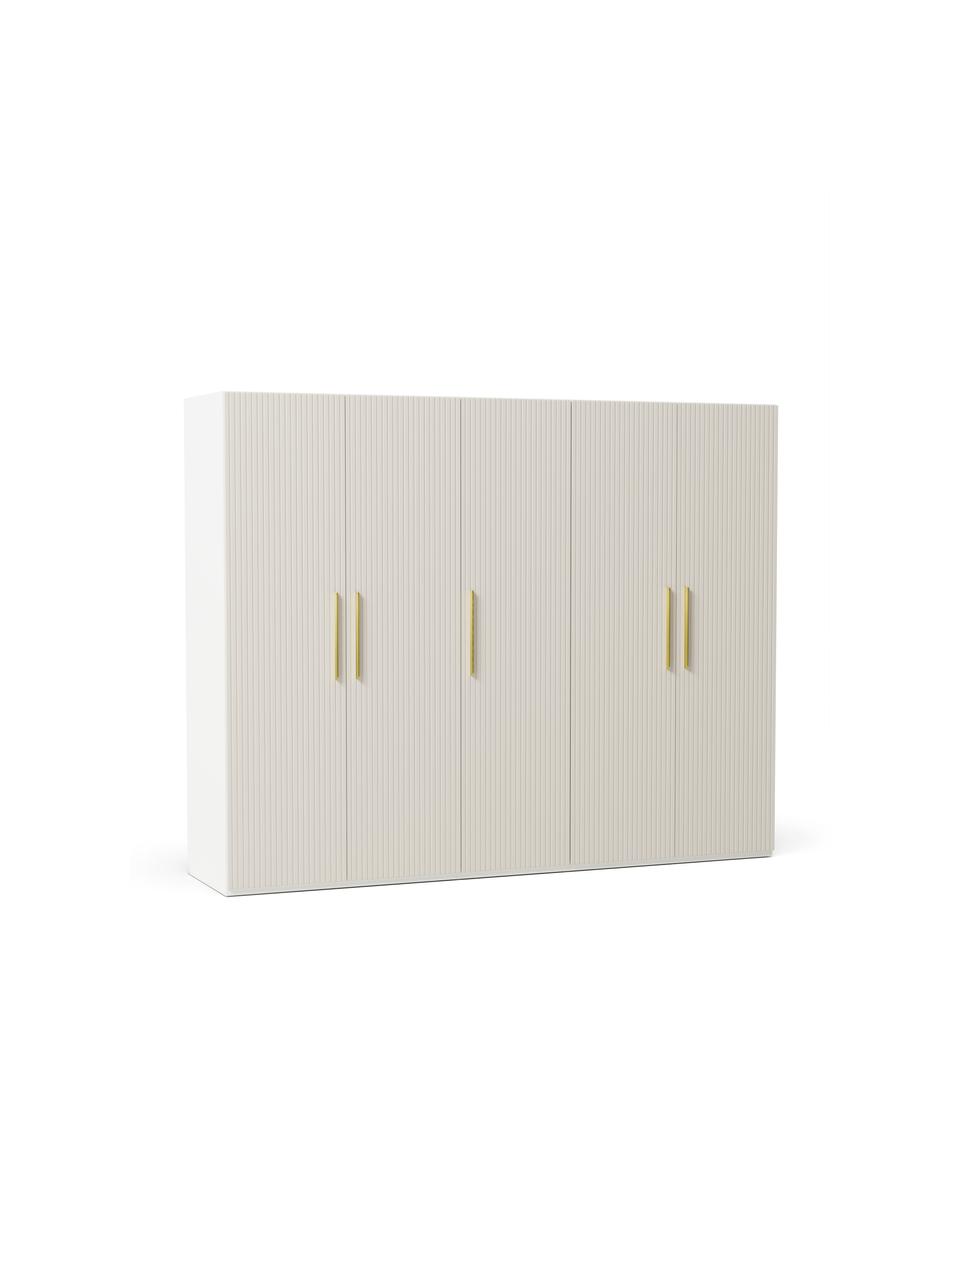 Modulární skříň s otočnými dveřmi Simone, šířka 250 cm, více variant, Dřevo, béžová, Interiér Basic, výška 200 cm